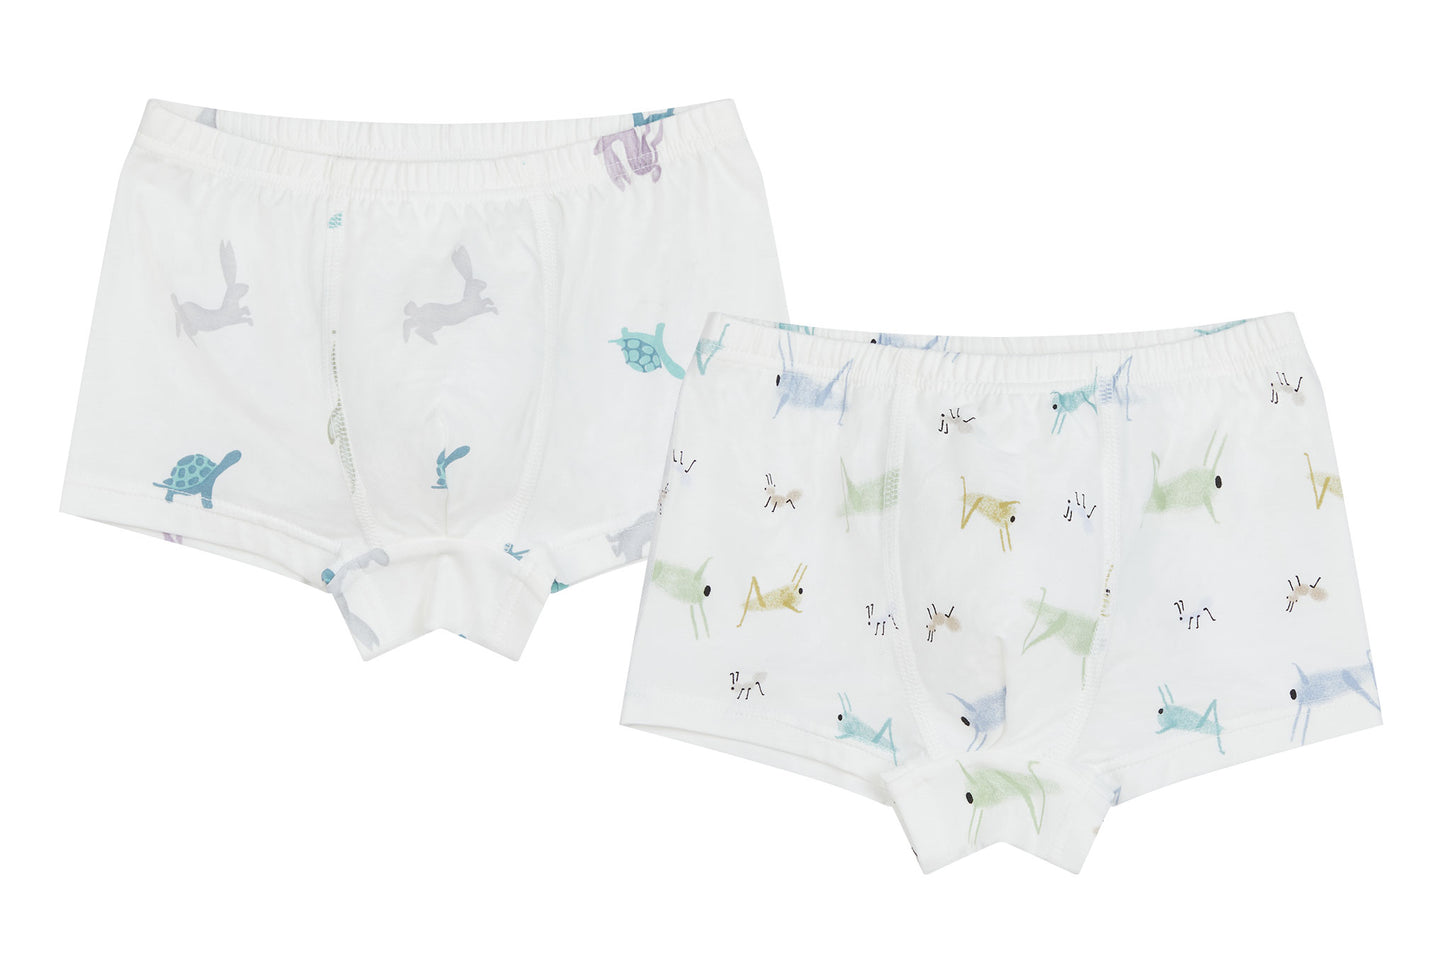 Blippi underwear size 4T, Babies & Kids, Babies & Kids Fashion on